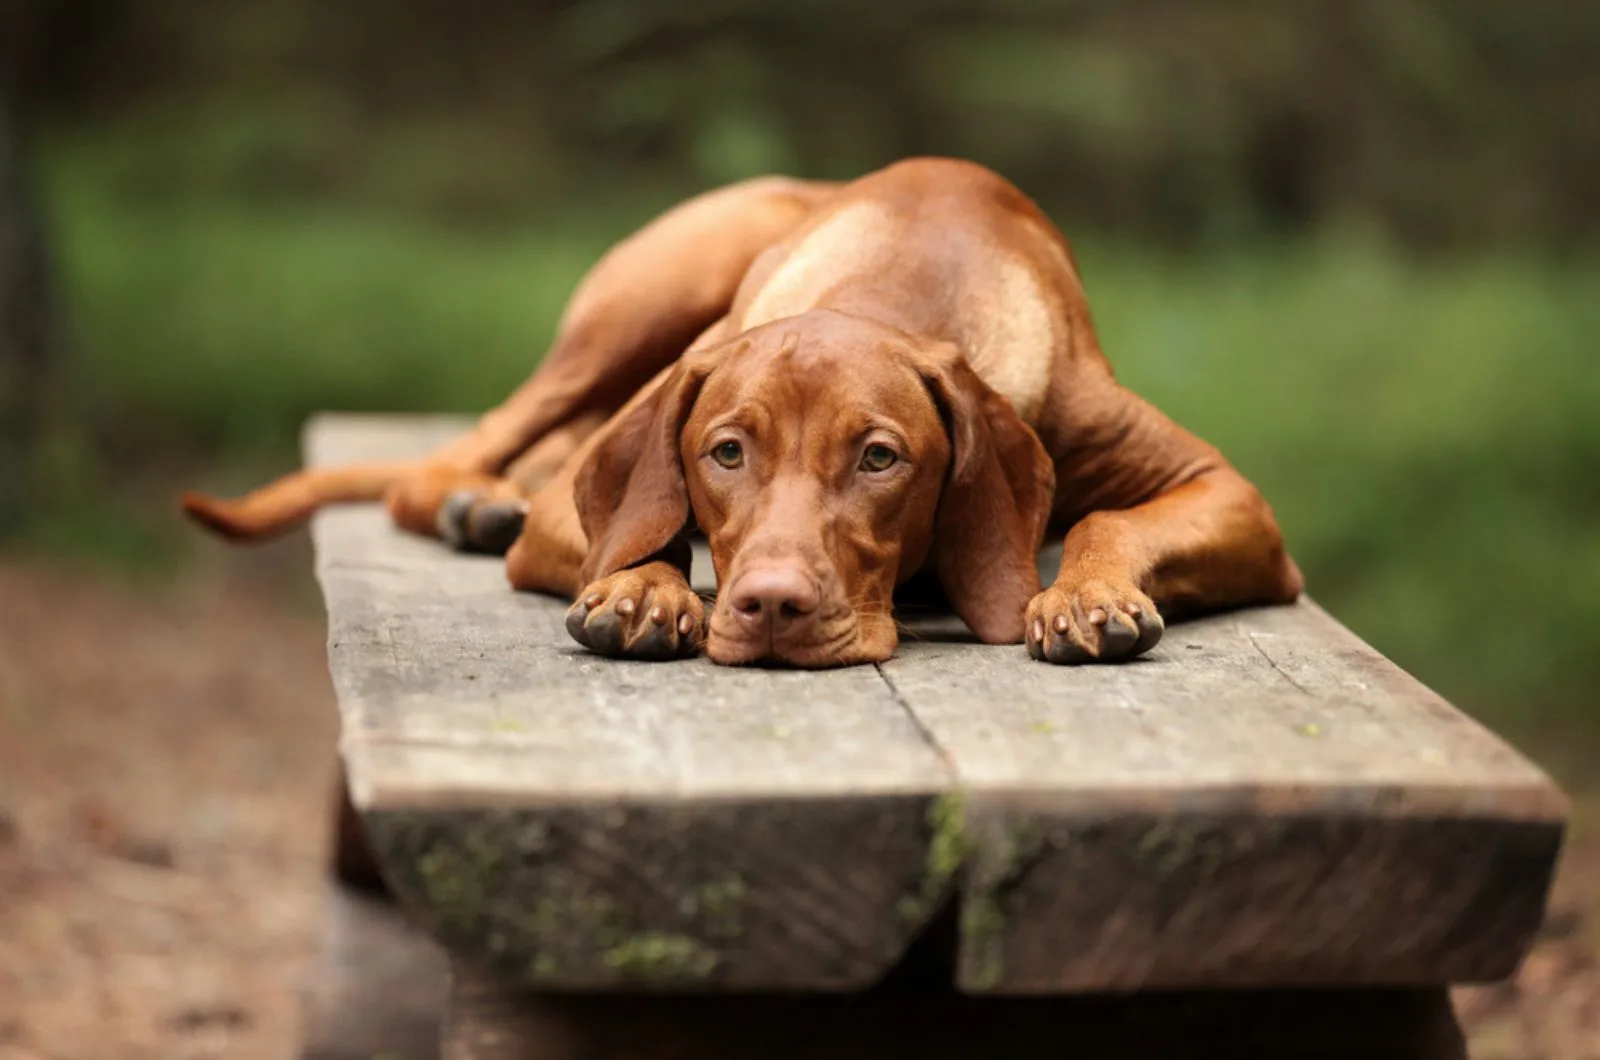 vizsla dog lying on the bench